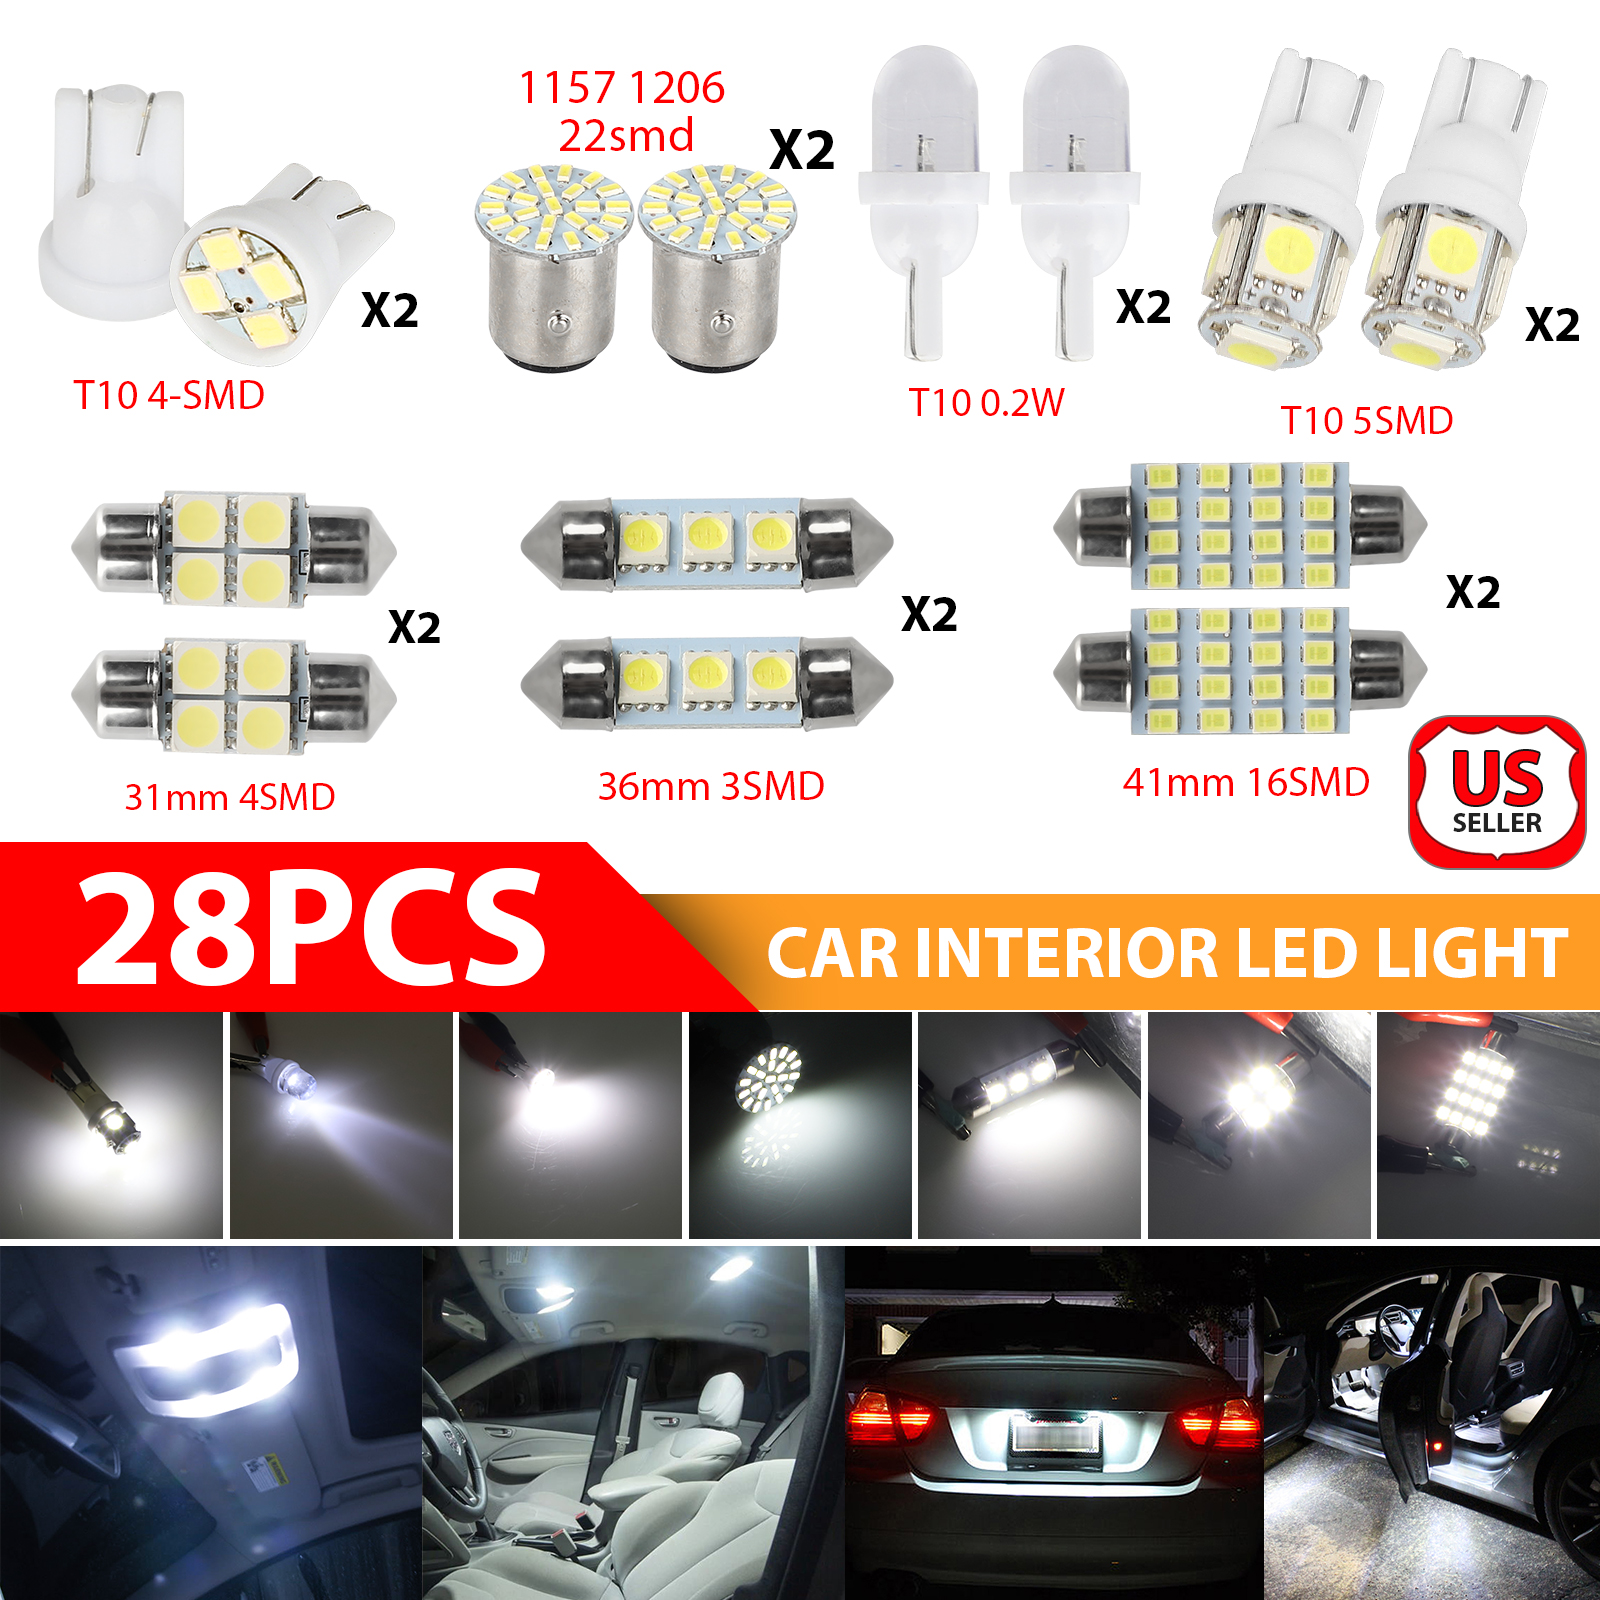 28Pcs Auto Car Interior LED Light Dome License Plate Mixed L